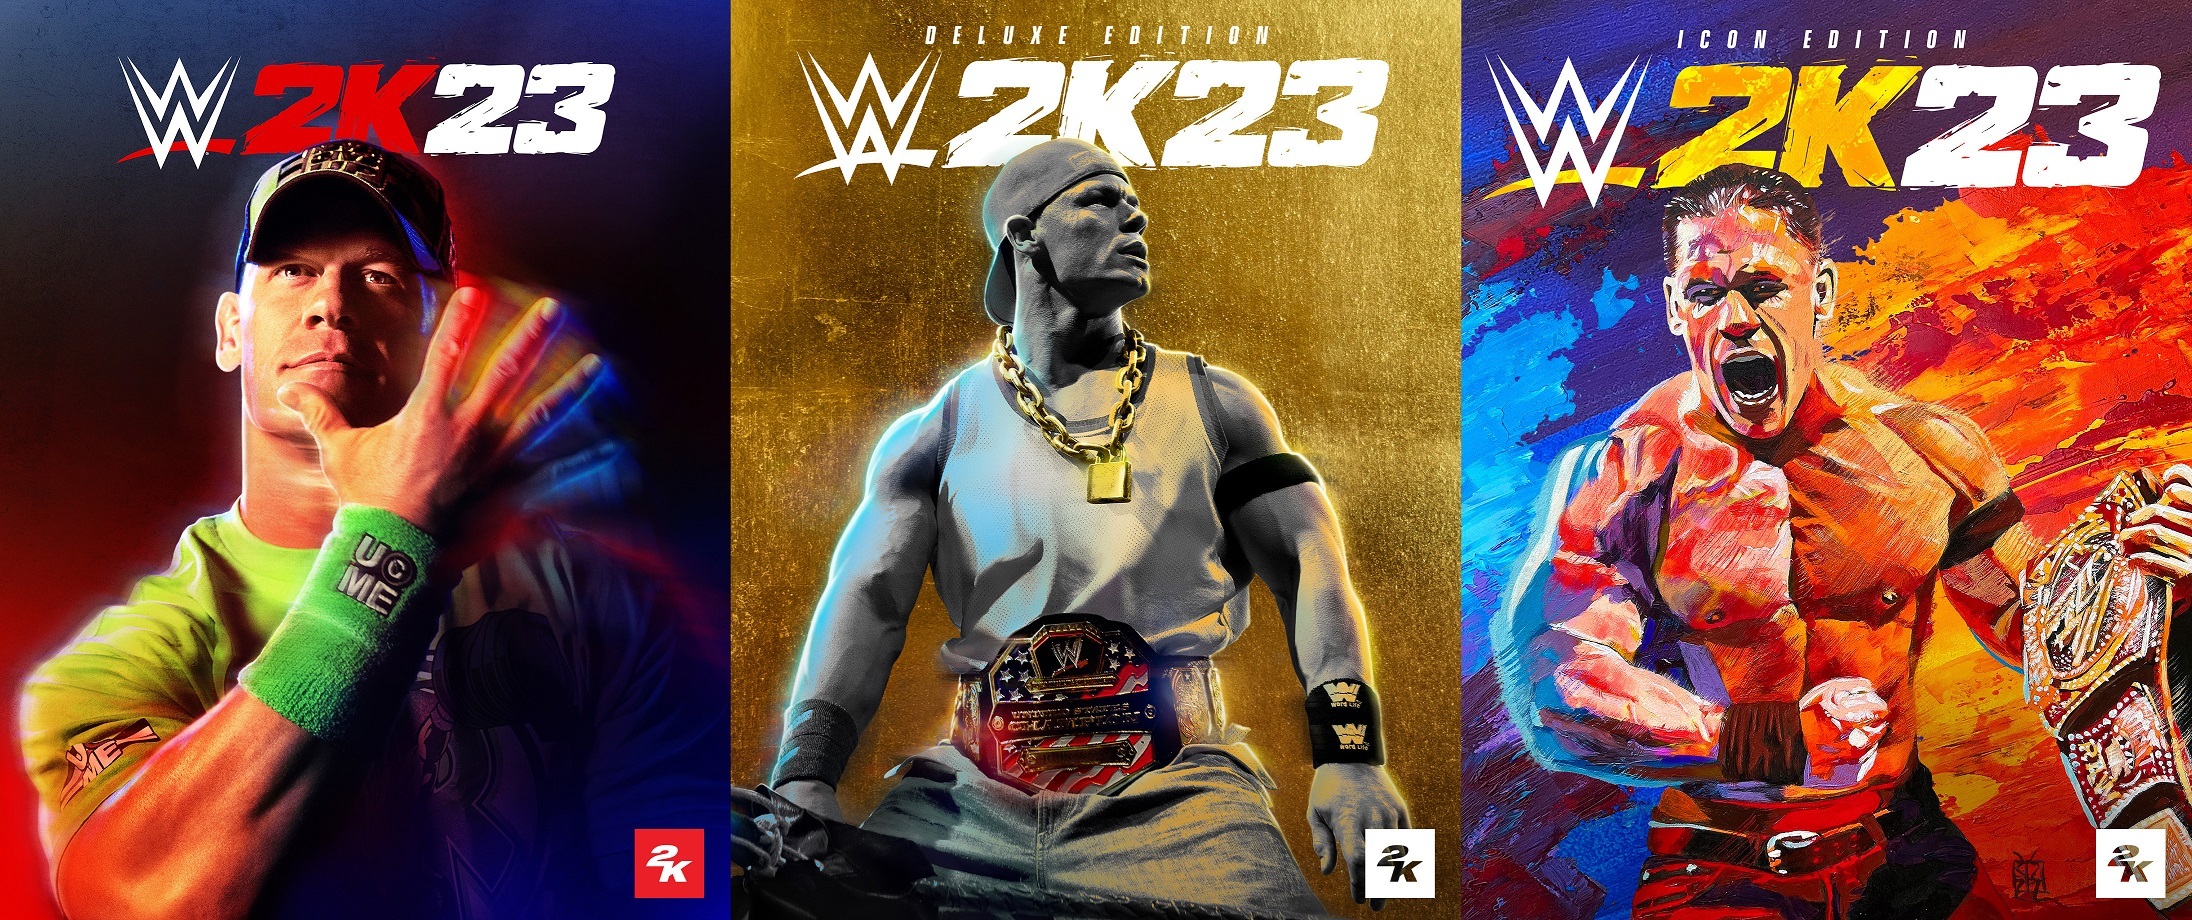 《WWE 2K23》3 月强悍登场 由摔角巨星 John Cena 担任封面人物插图